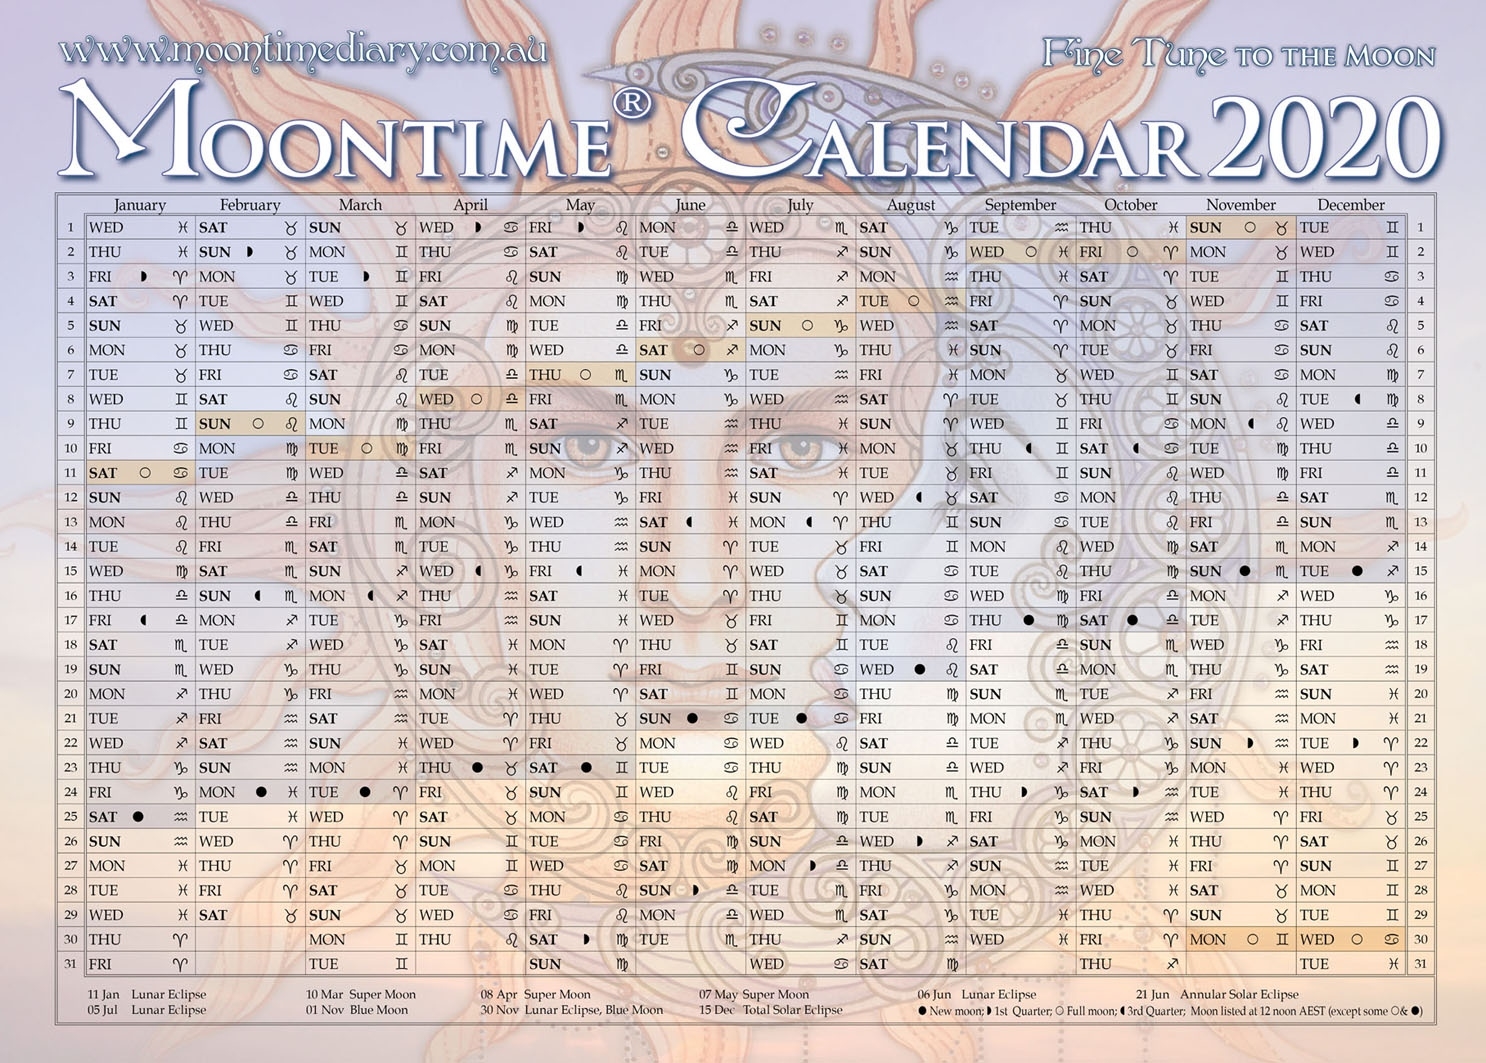 Moontime Calendar 2020 Lunar Calendar With Zodiac Signs